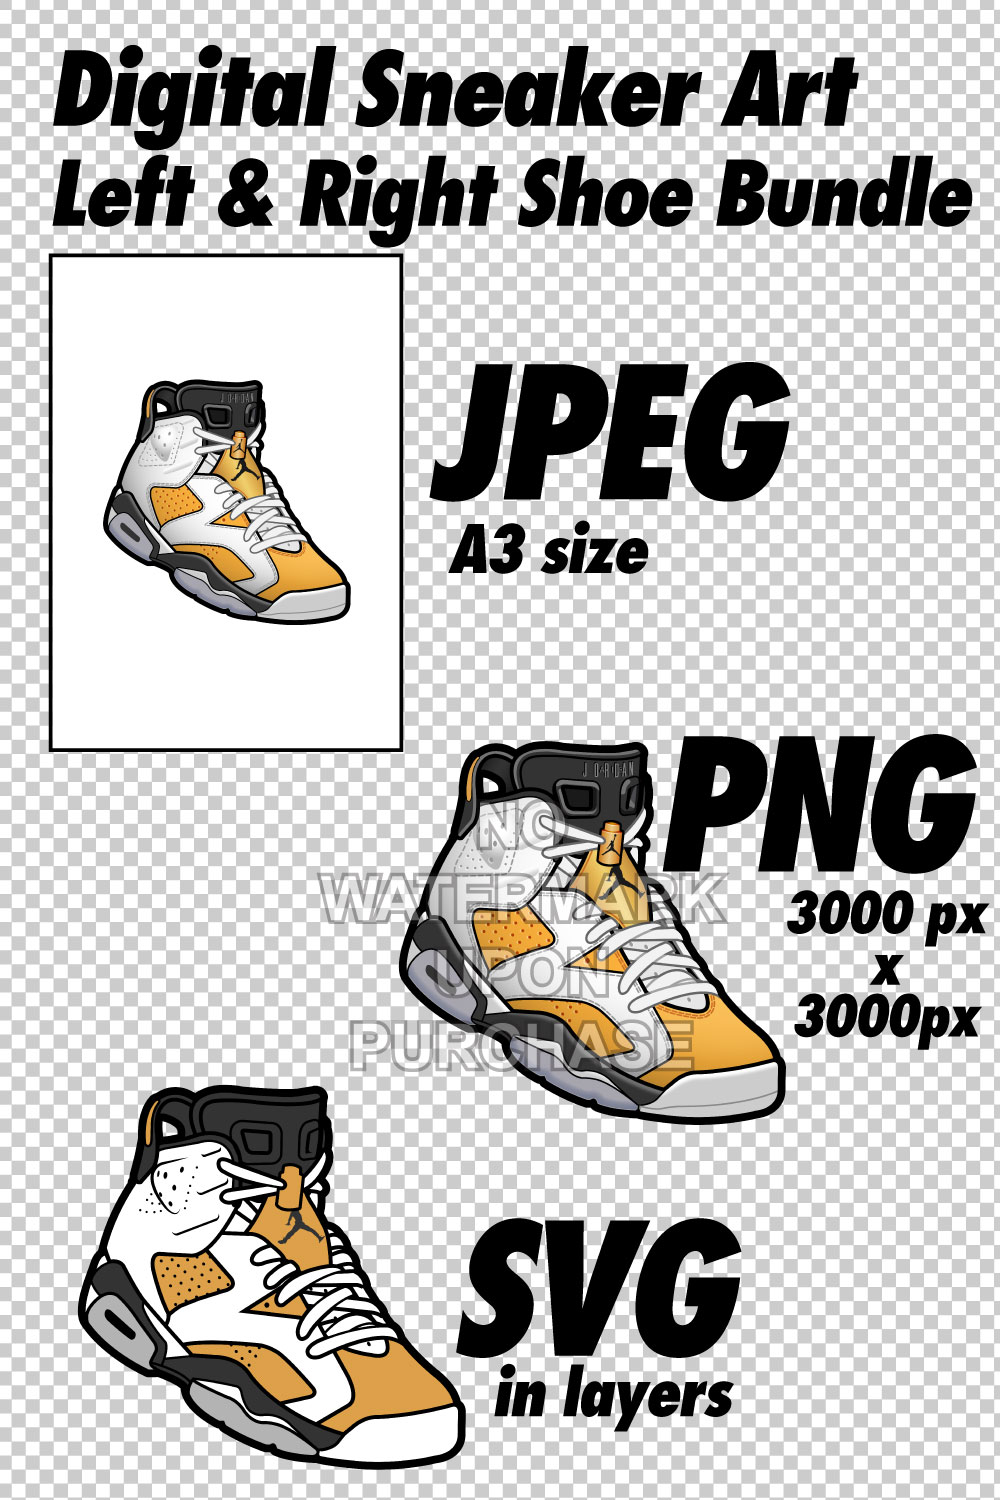 Air Jordan 6 Yellow Ochre JPEG PNG SVG Sneaker Art right & left shoe bundle Digital Download pinterest preview image.